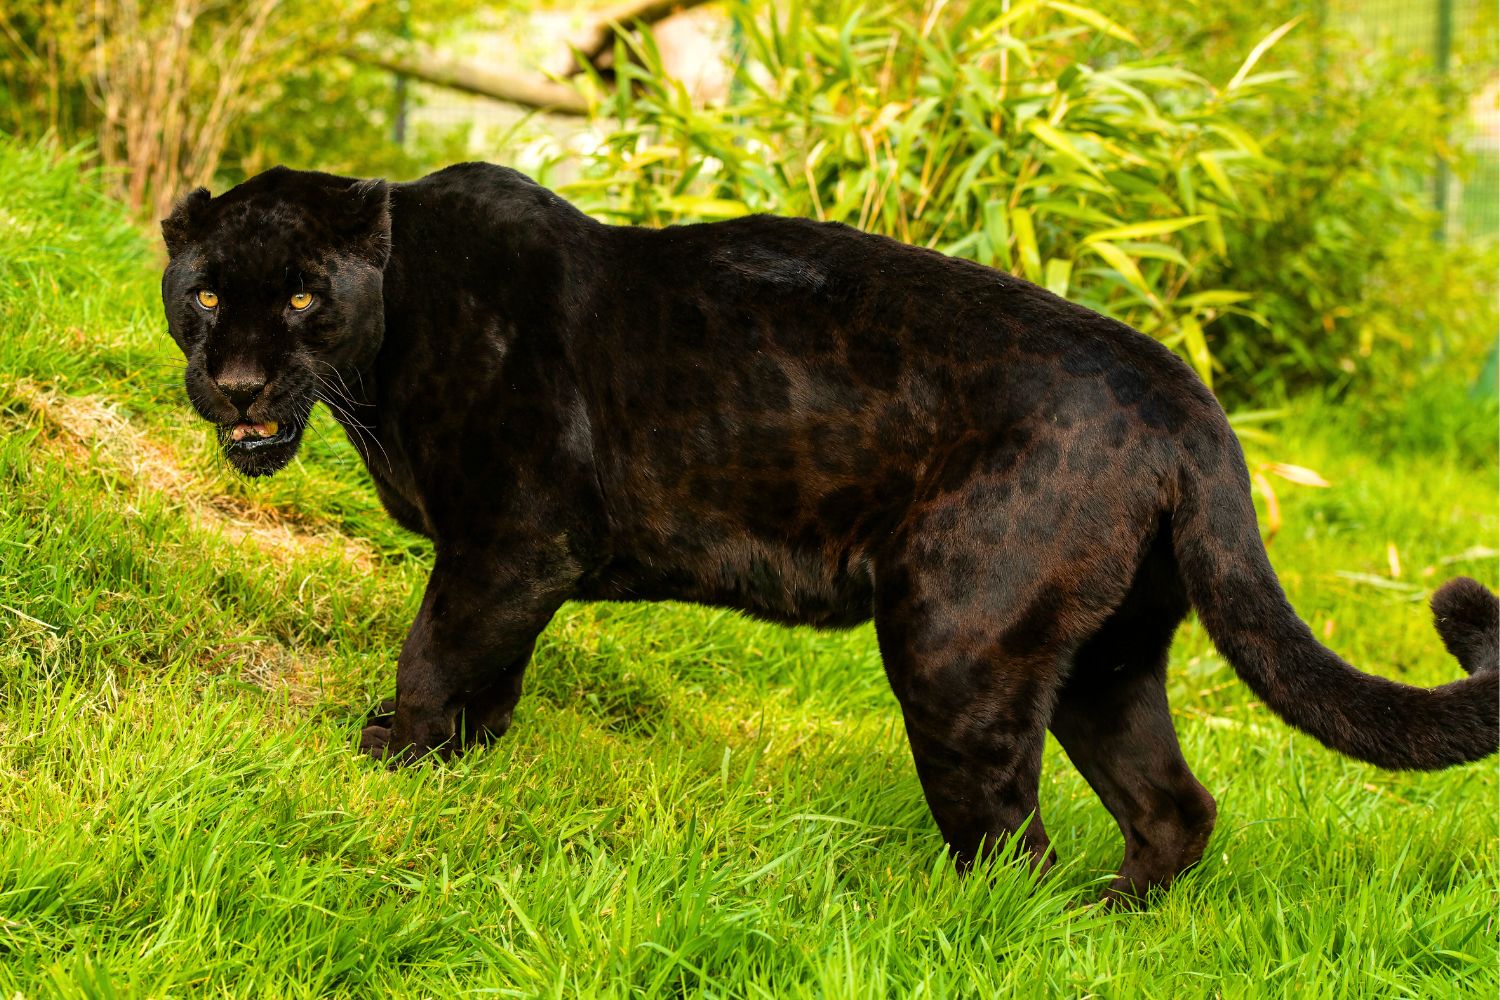 3. The black jaguars.